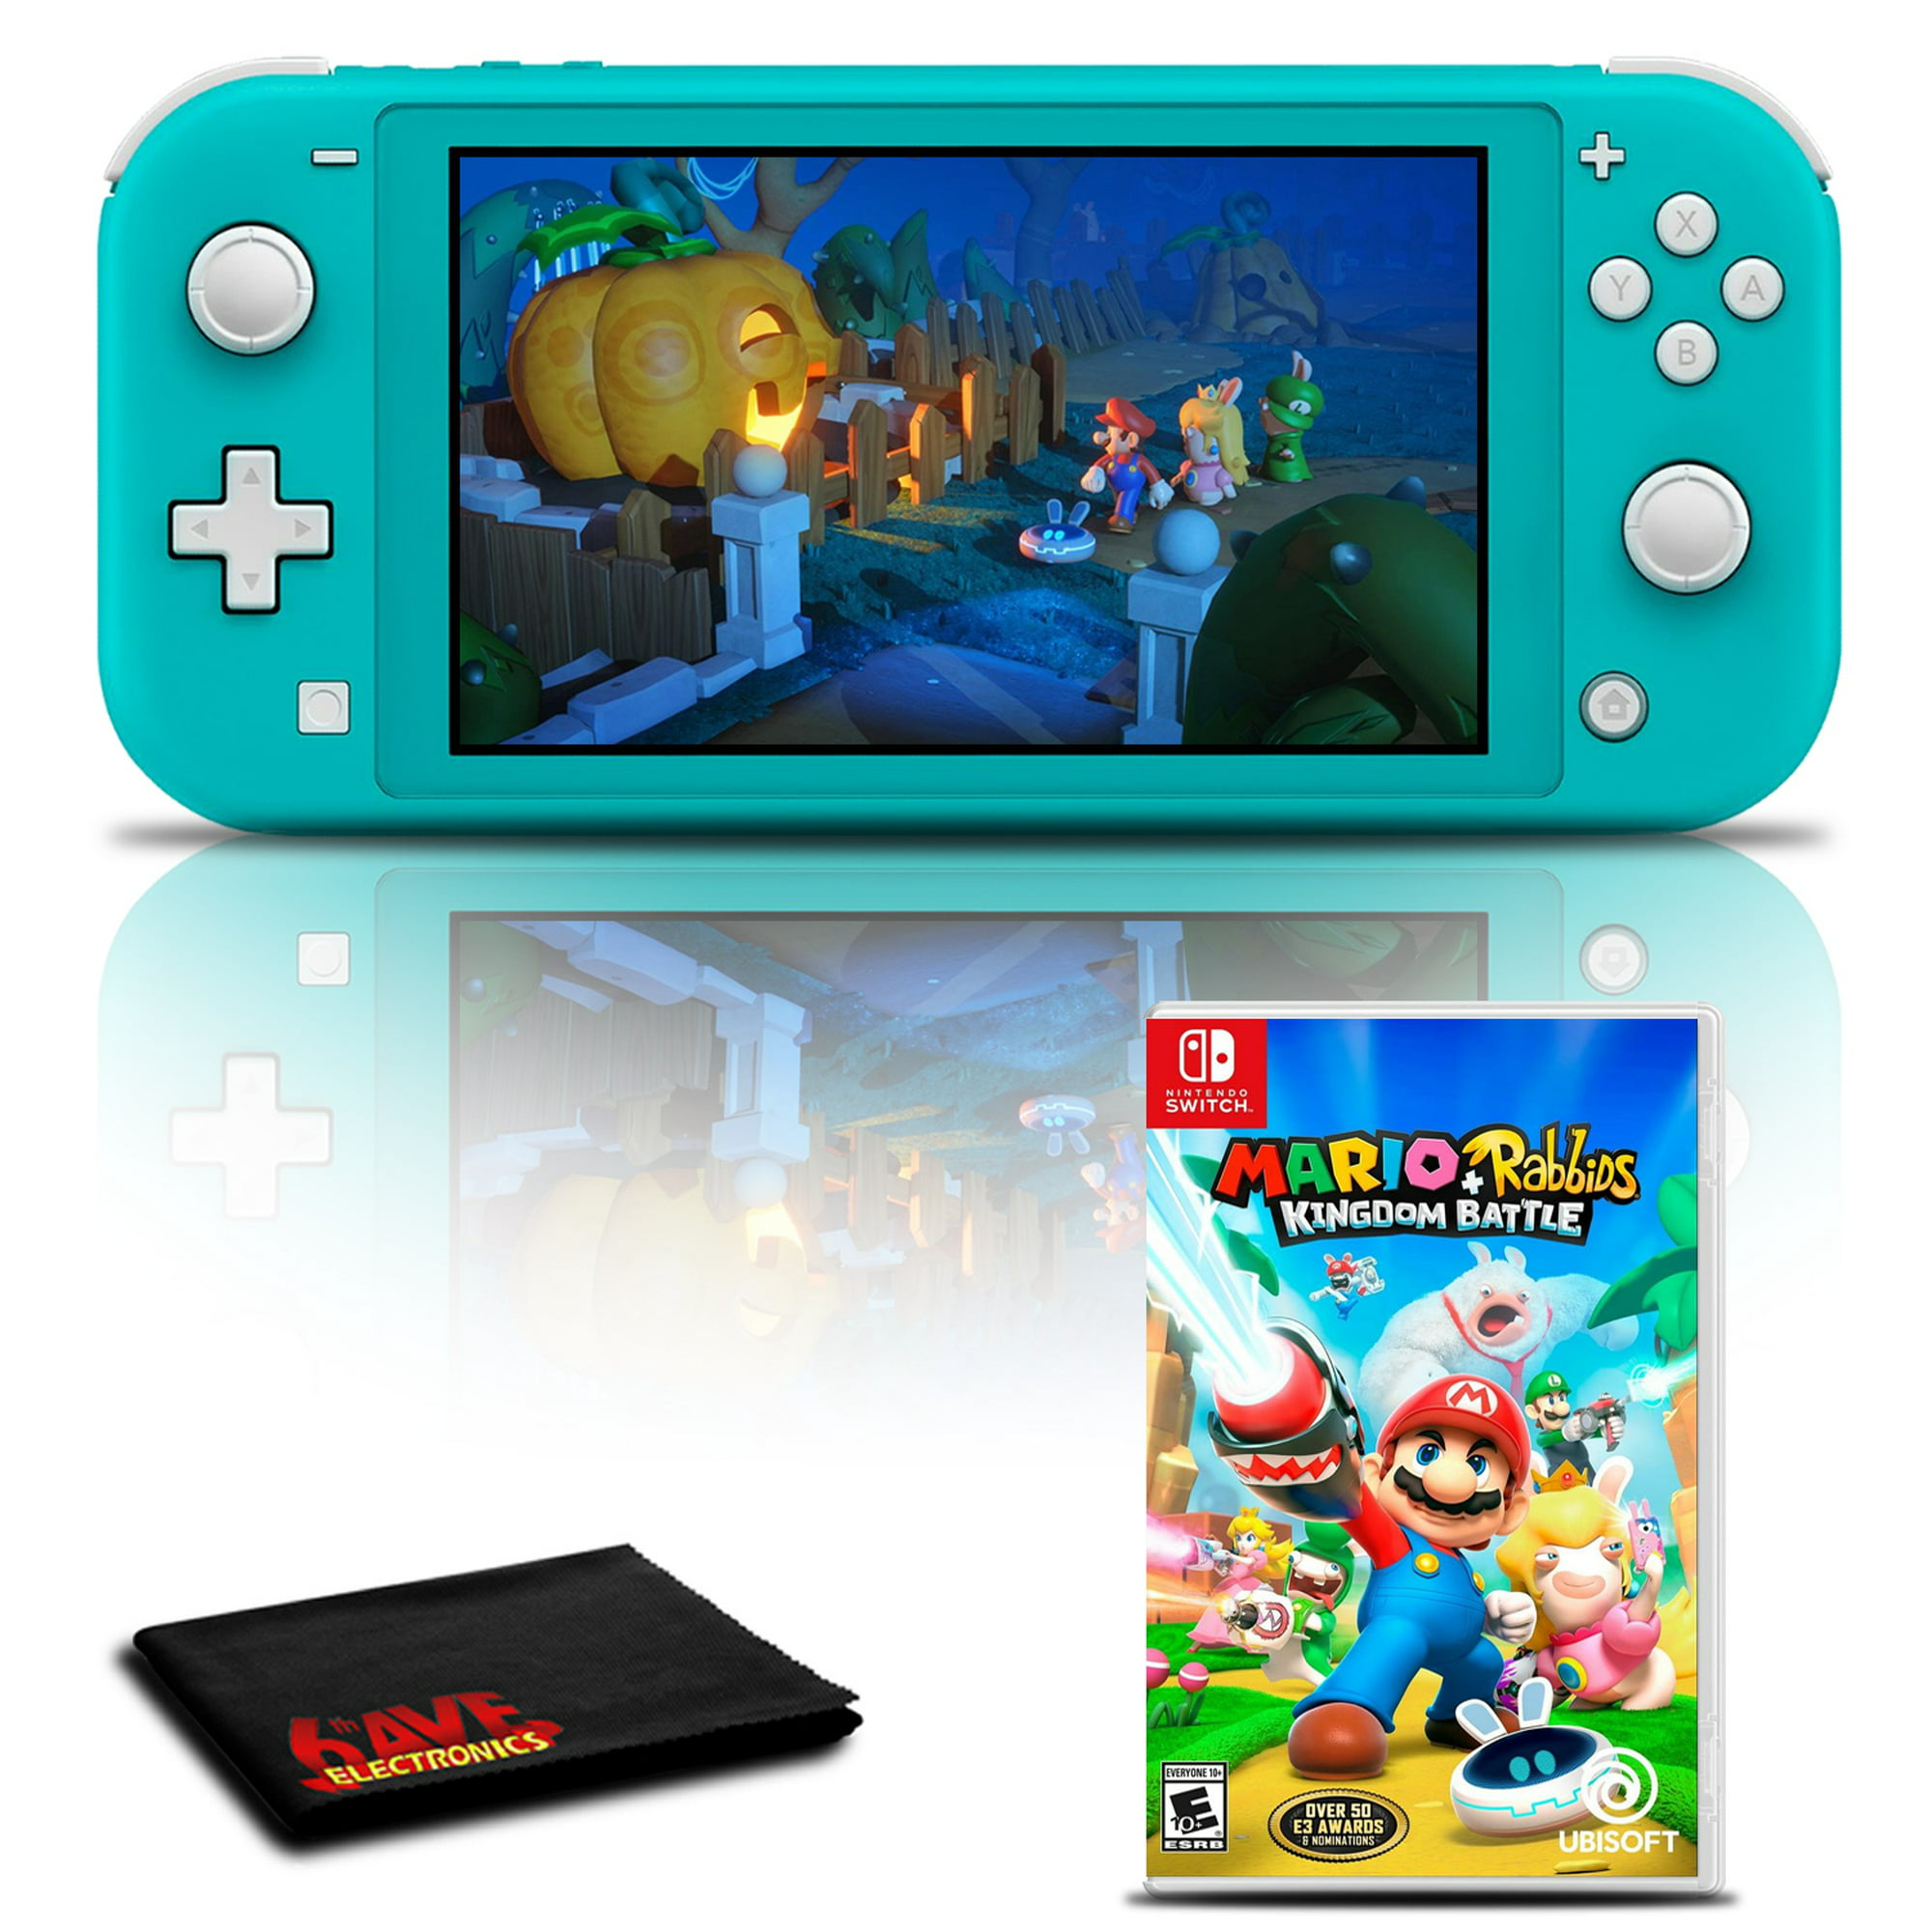 Nintendo Switch Lite (Turquoise) with Mario plus Rabbids: Kingdom Battle